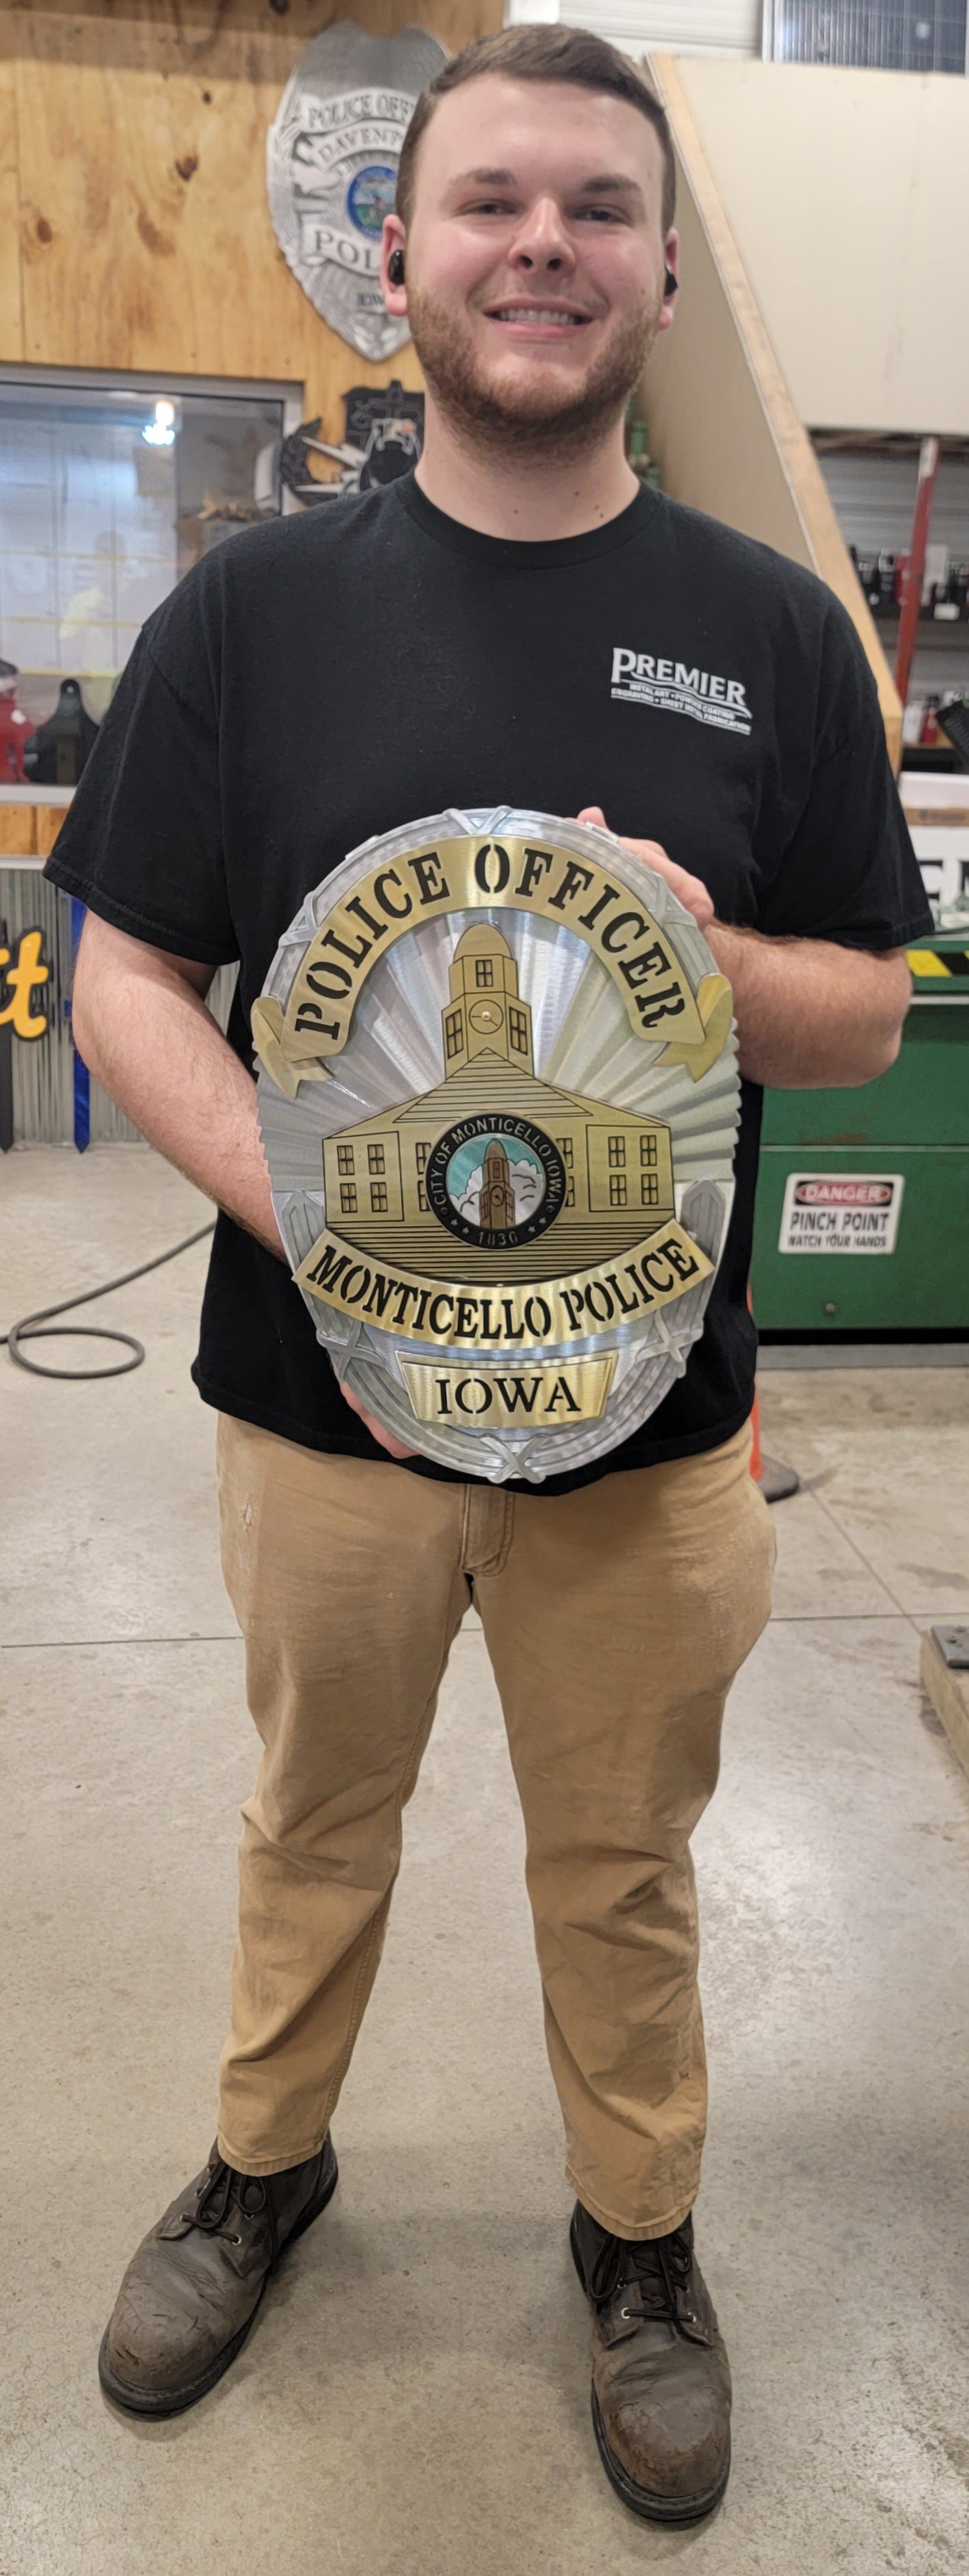 Monticello Iowa Police Officer Badge